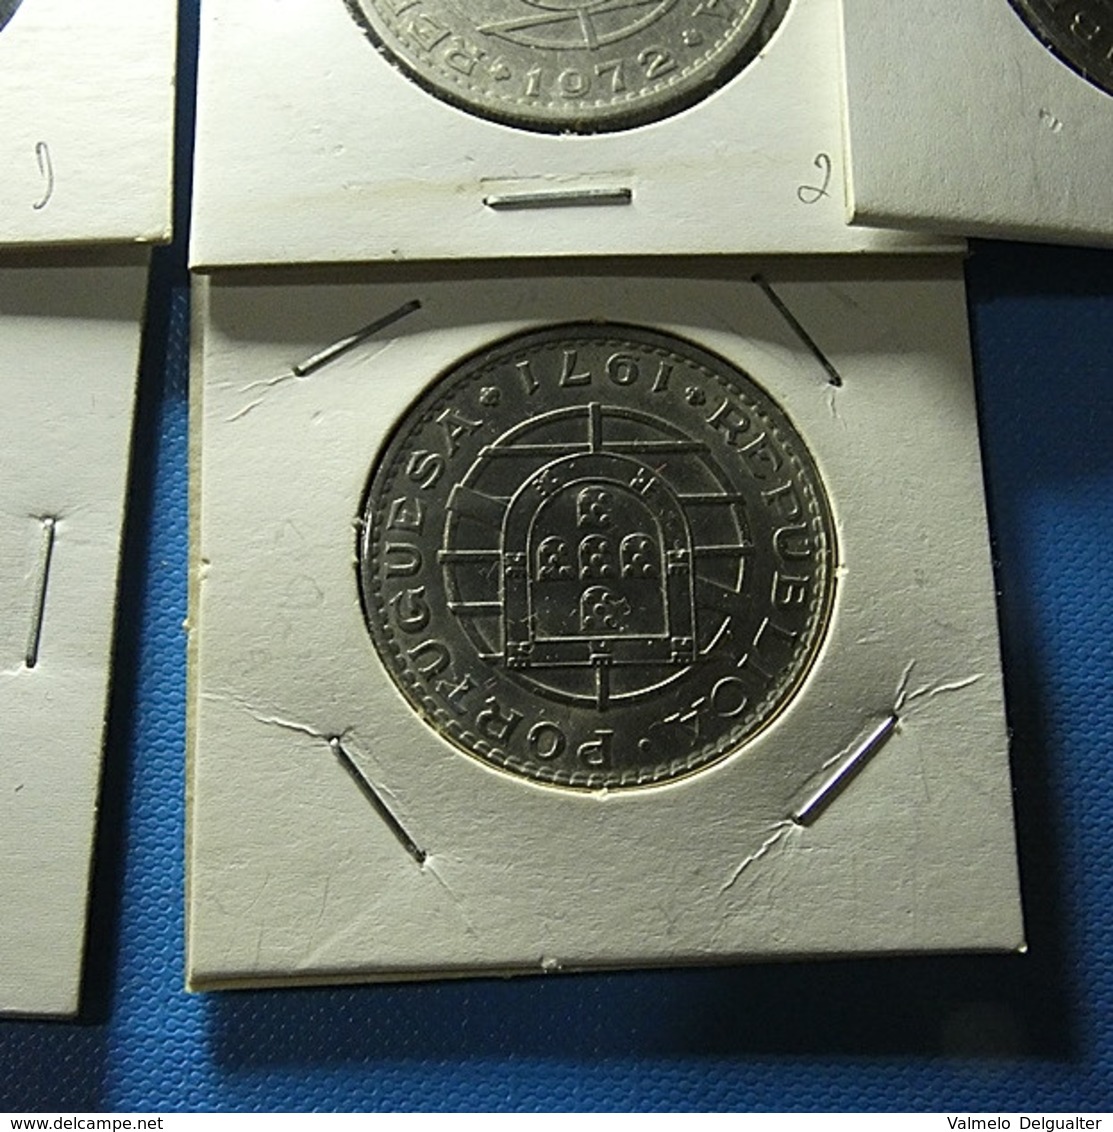 10 coins Moçambique and Angola 20 escudos 1971